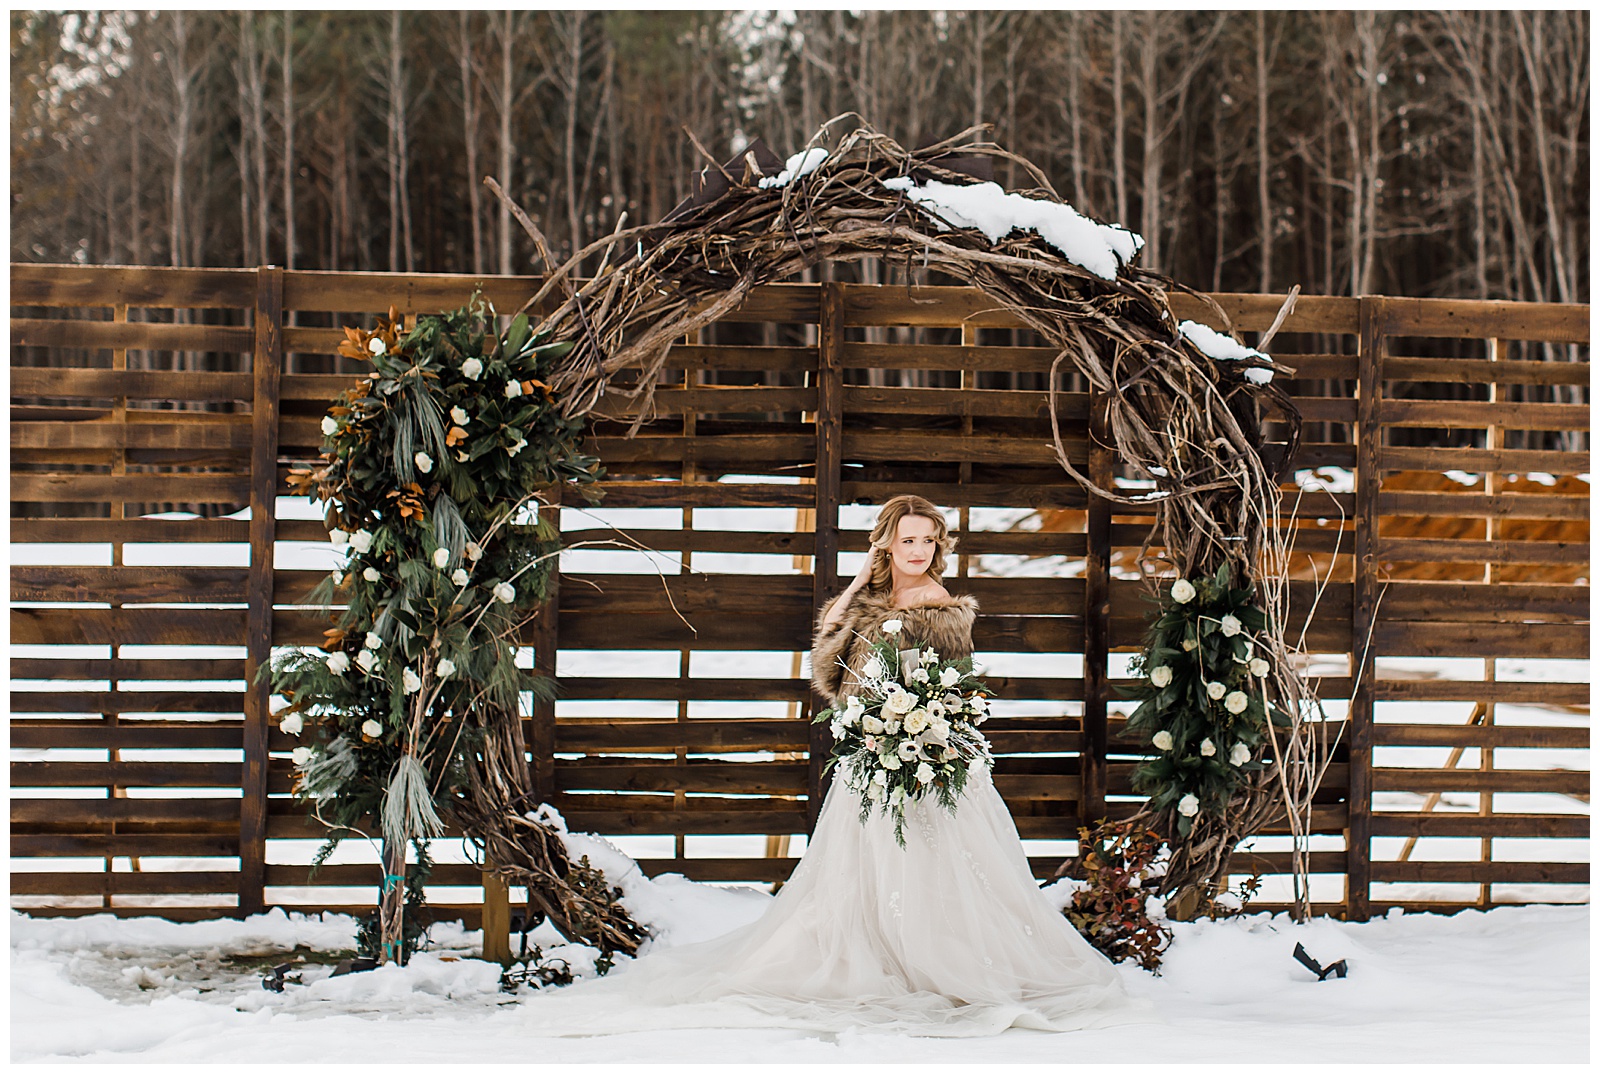 antebellum-of-new-kent-winter-wedding-inspiration-ch-sh-fredericks-photography_0032.jpg